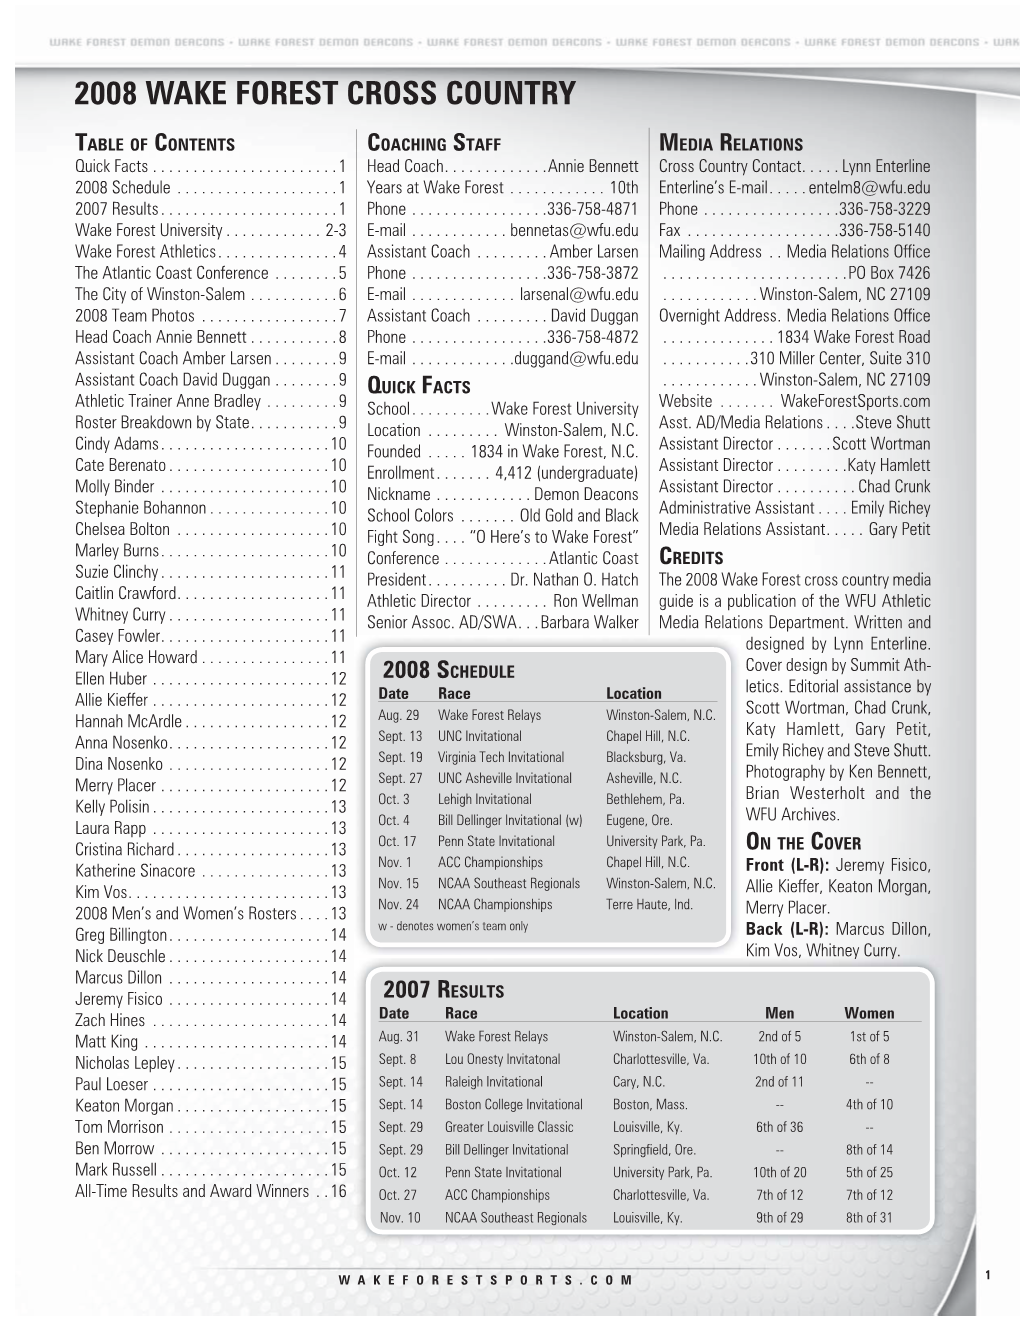 2008 CC Media Guide.Indd